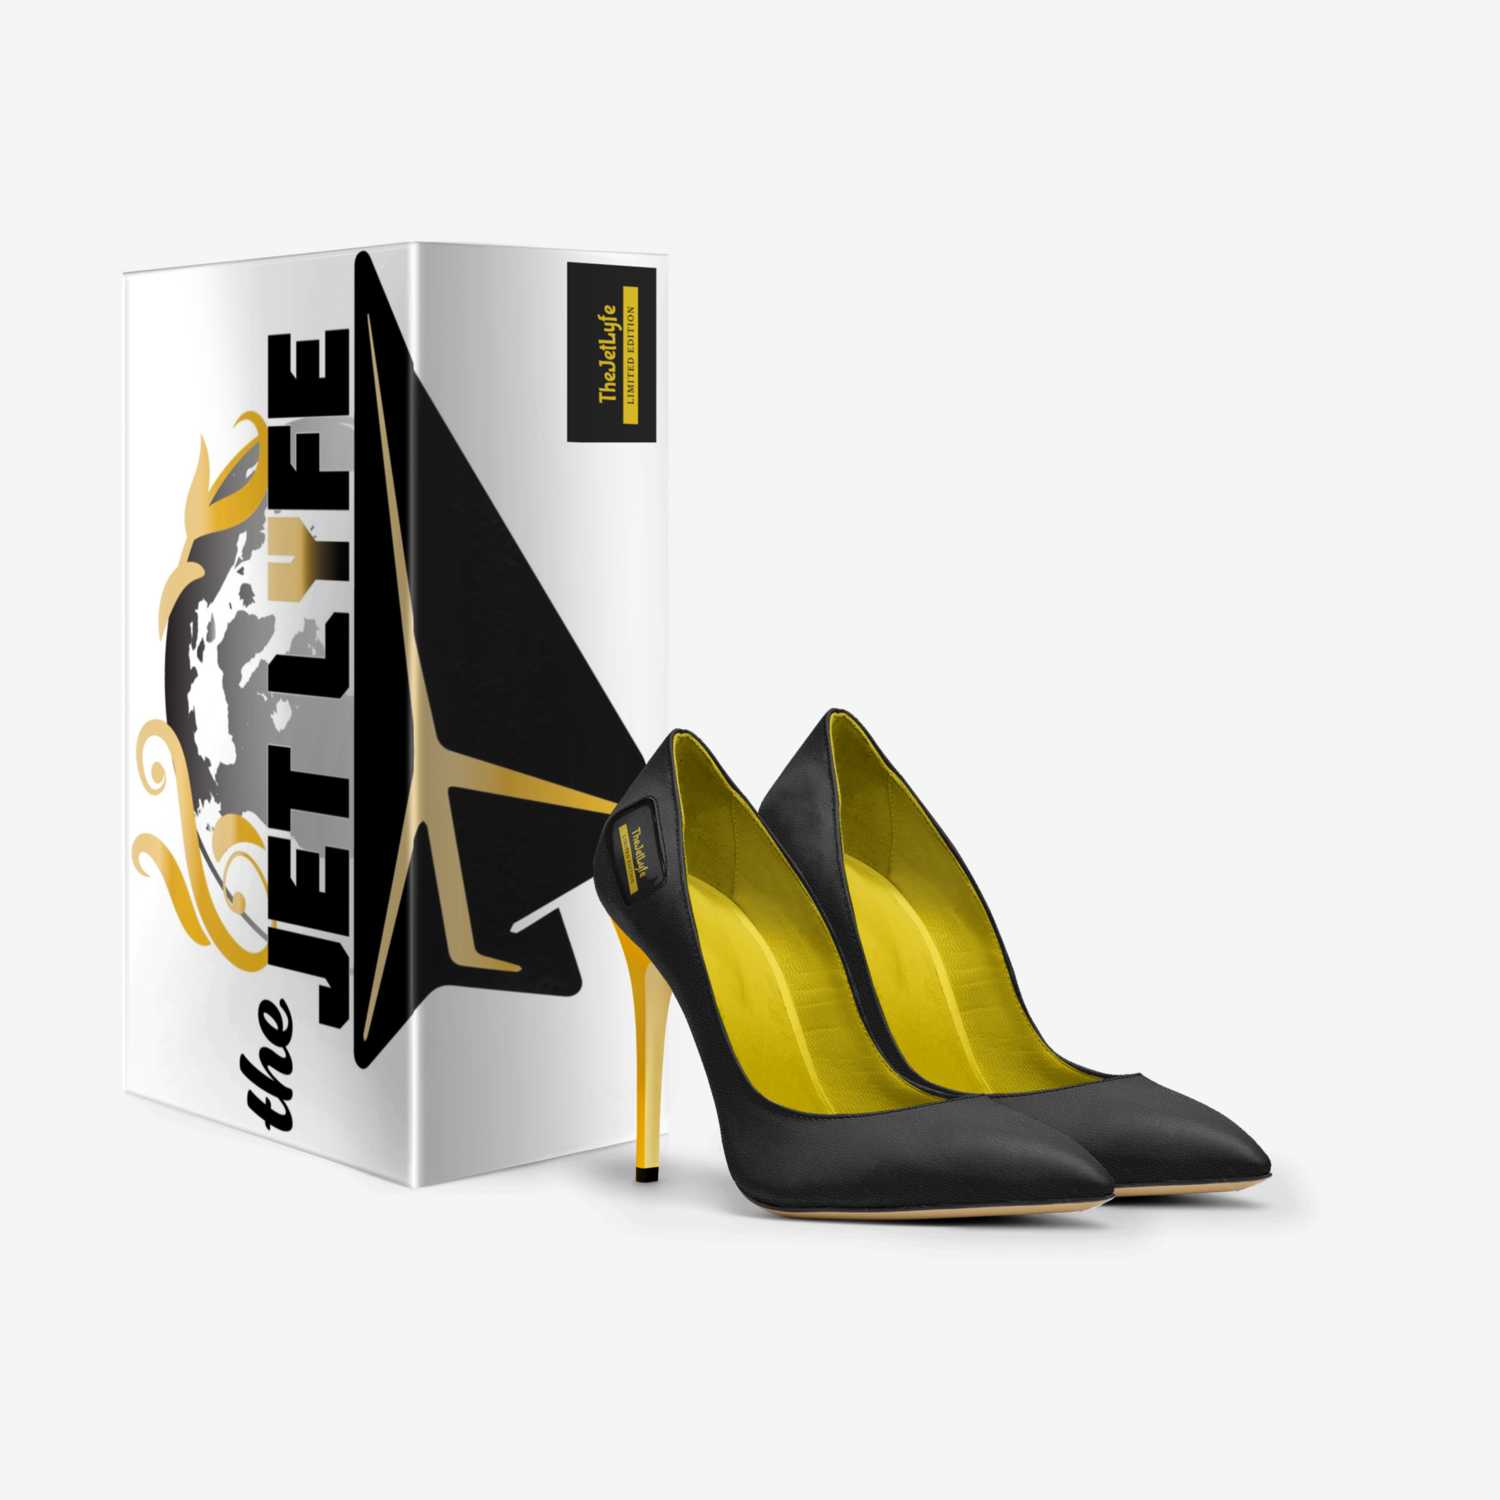 Unprecedented  custom made in Italy shoes by Antonio Holloman | Box view